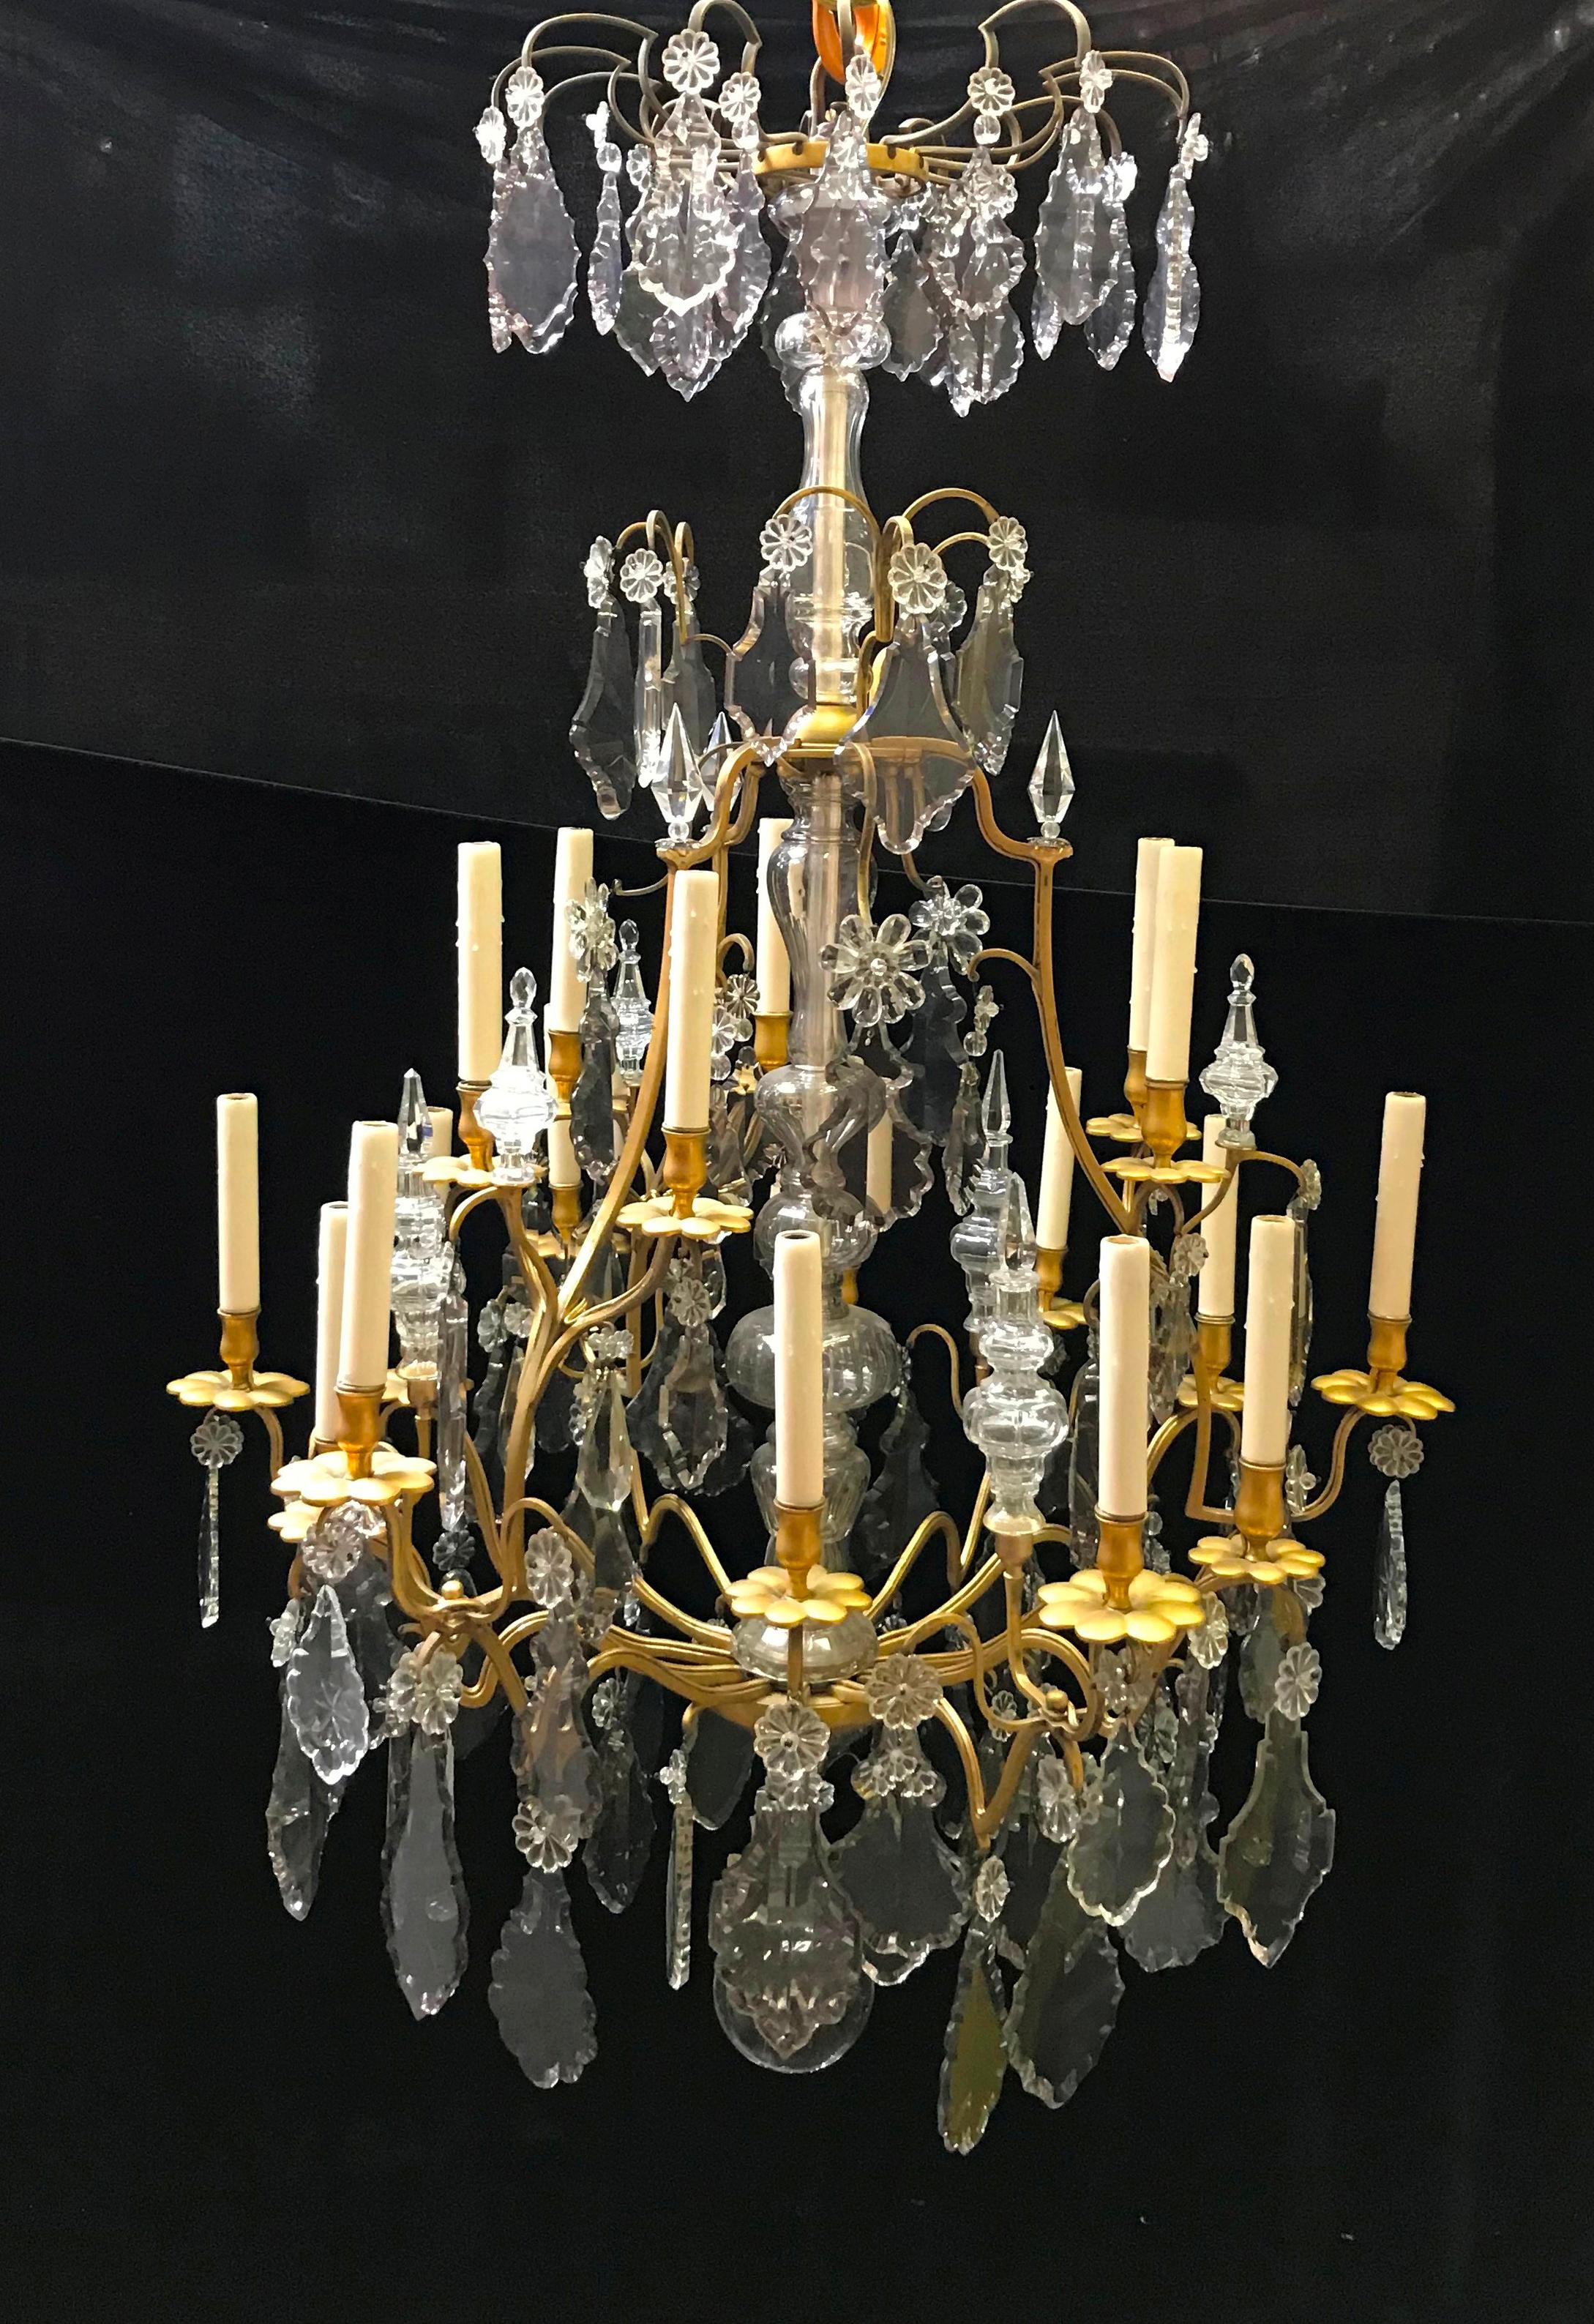 chrystal chandeliers